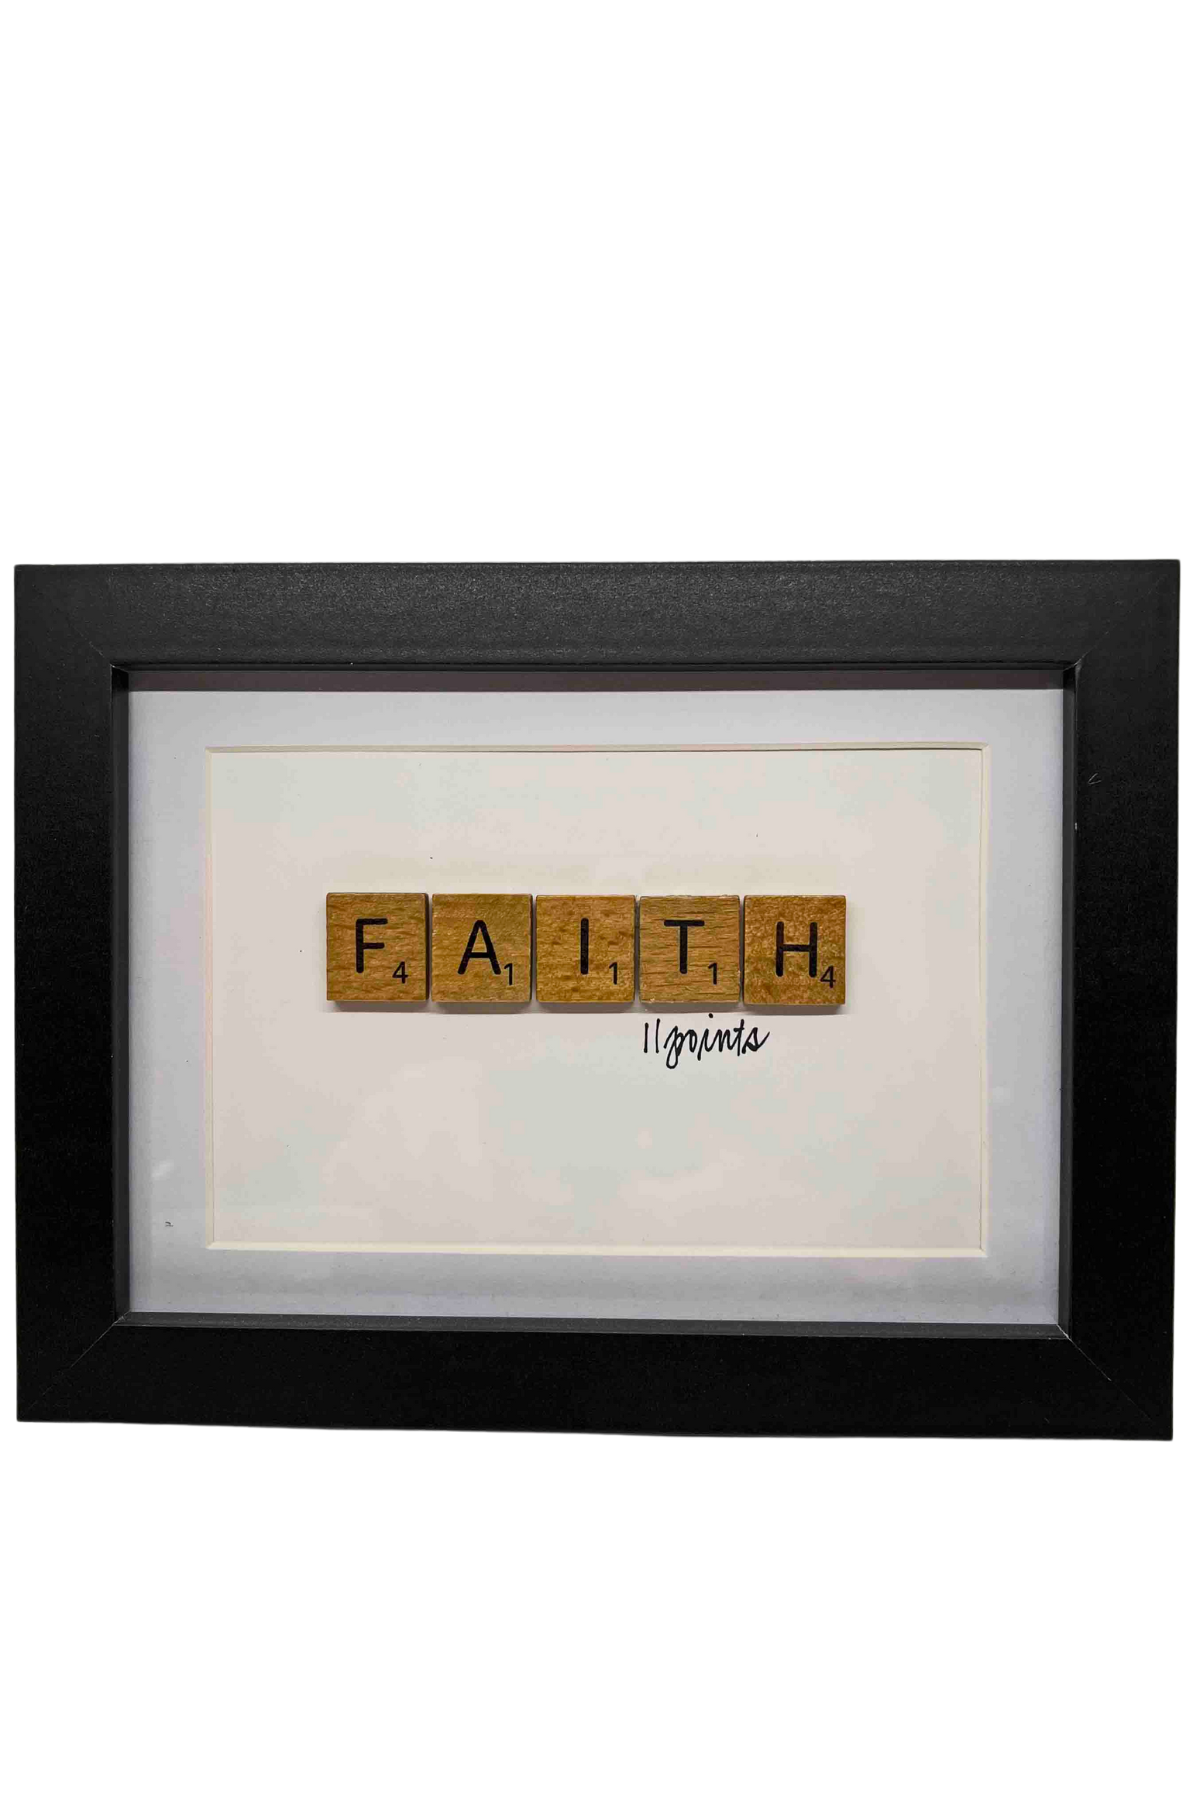 Faith Scrabble Word Frame by Wordz in Framez